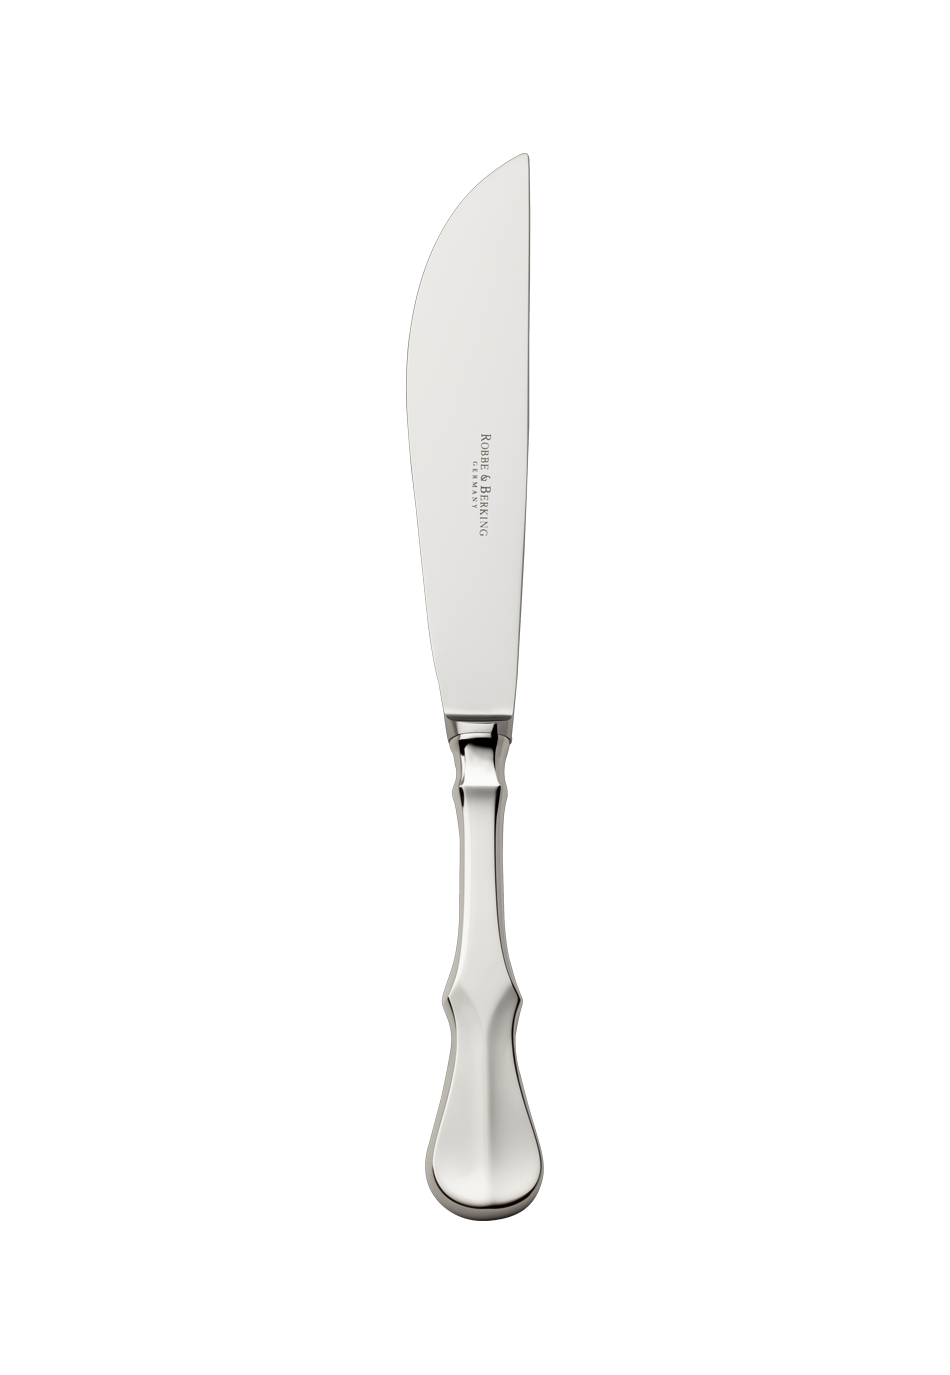 Alt-Kopenhagen Carving Knife (150g massive silverplated)